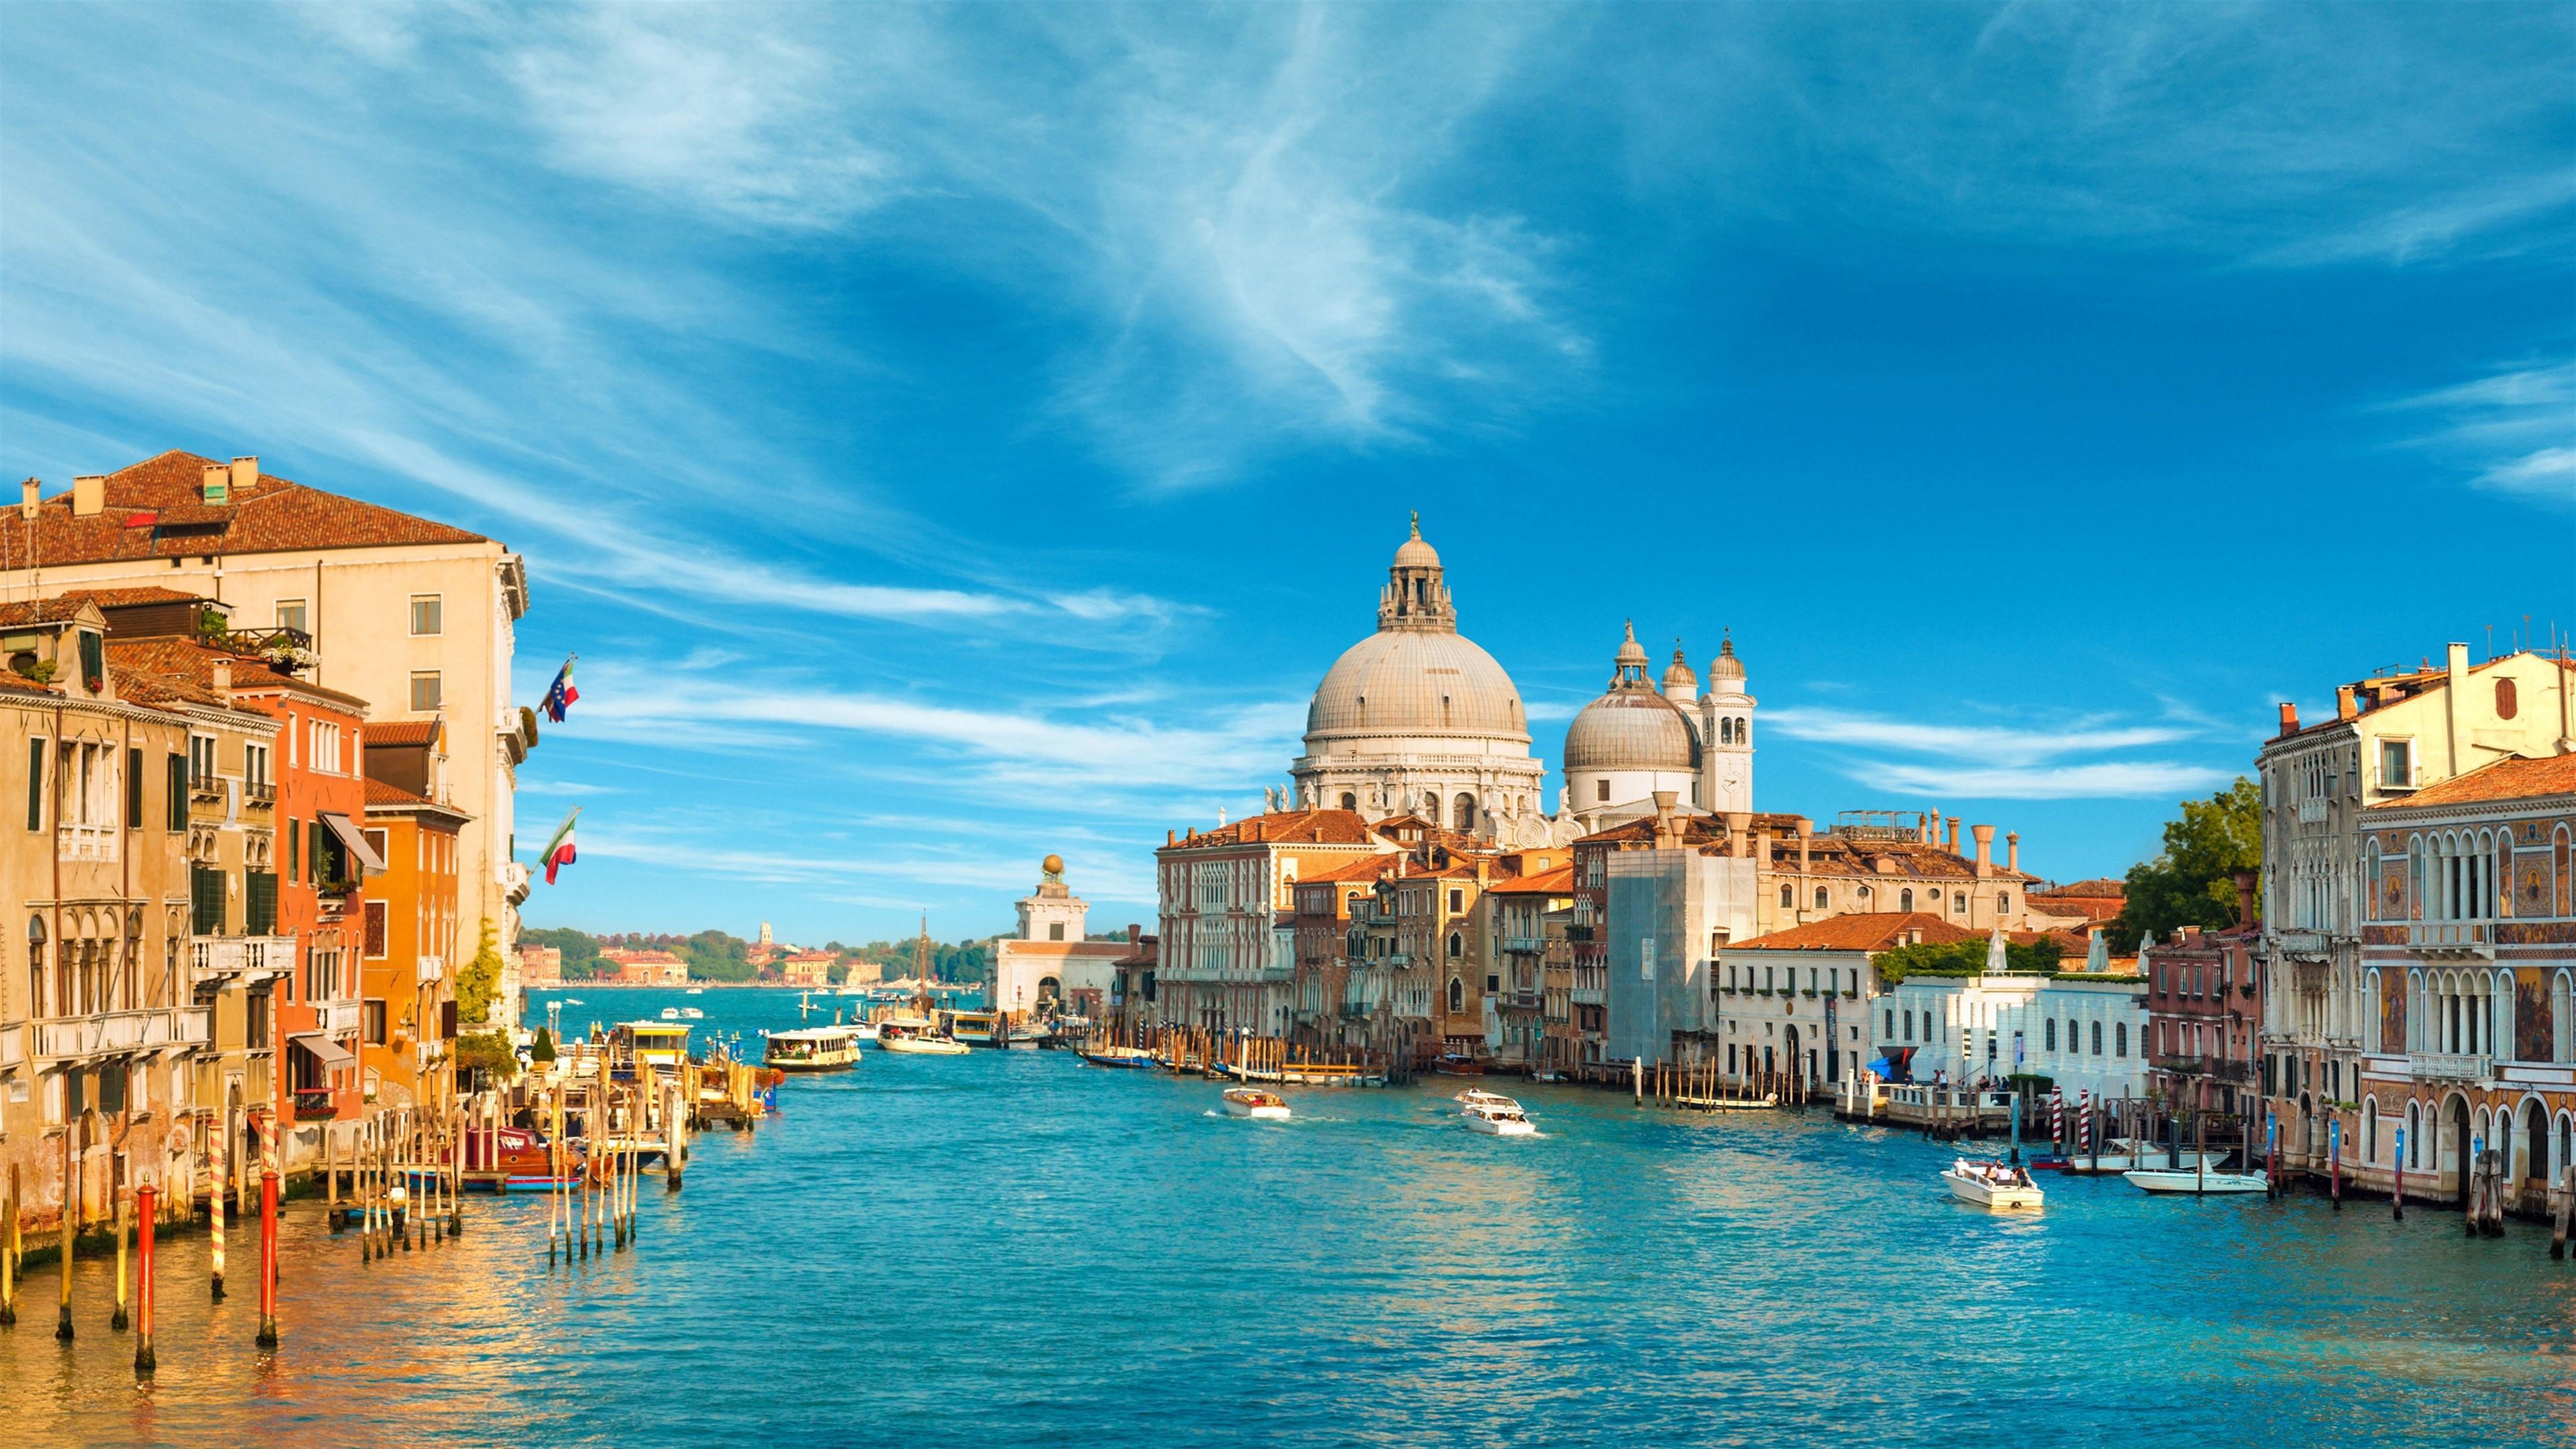 HD wallpaper, Grand Canal Venice Italy 4K